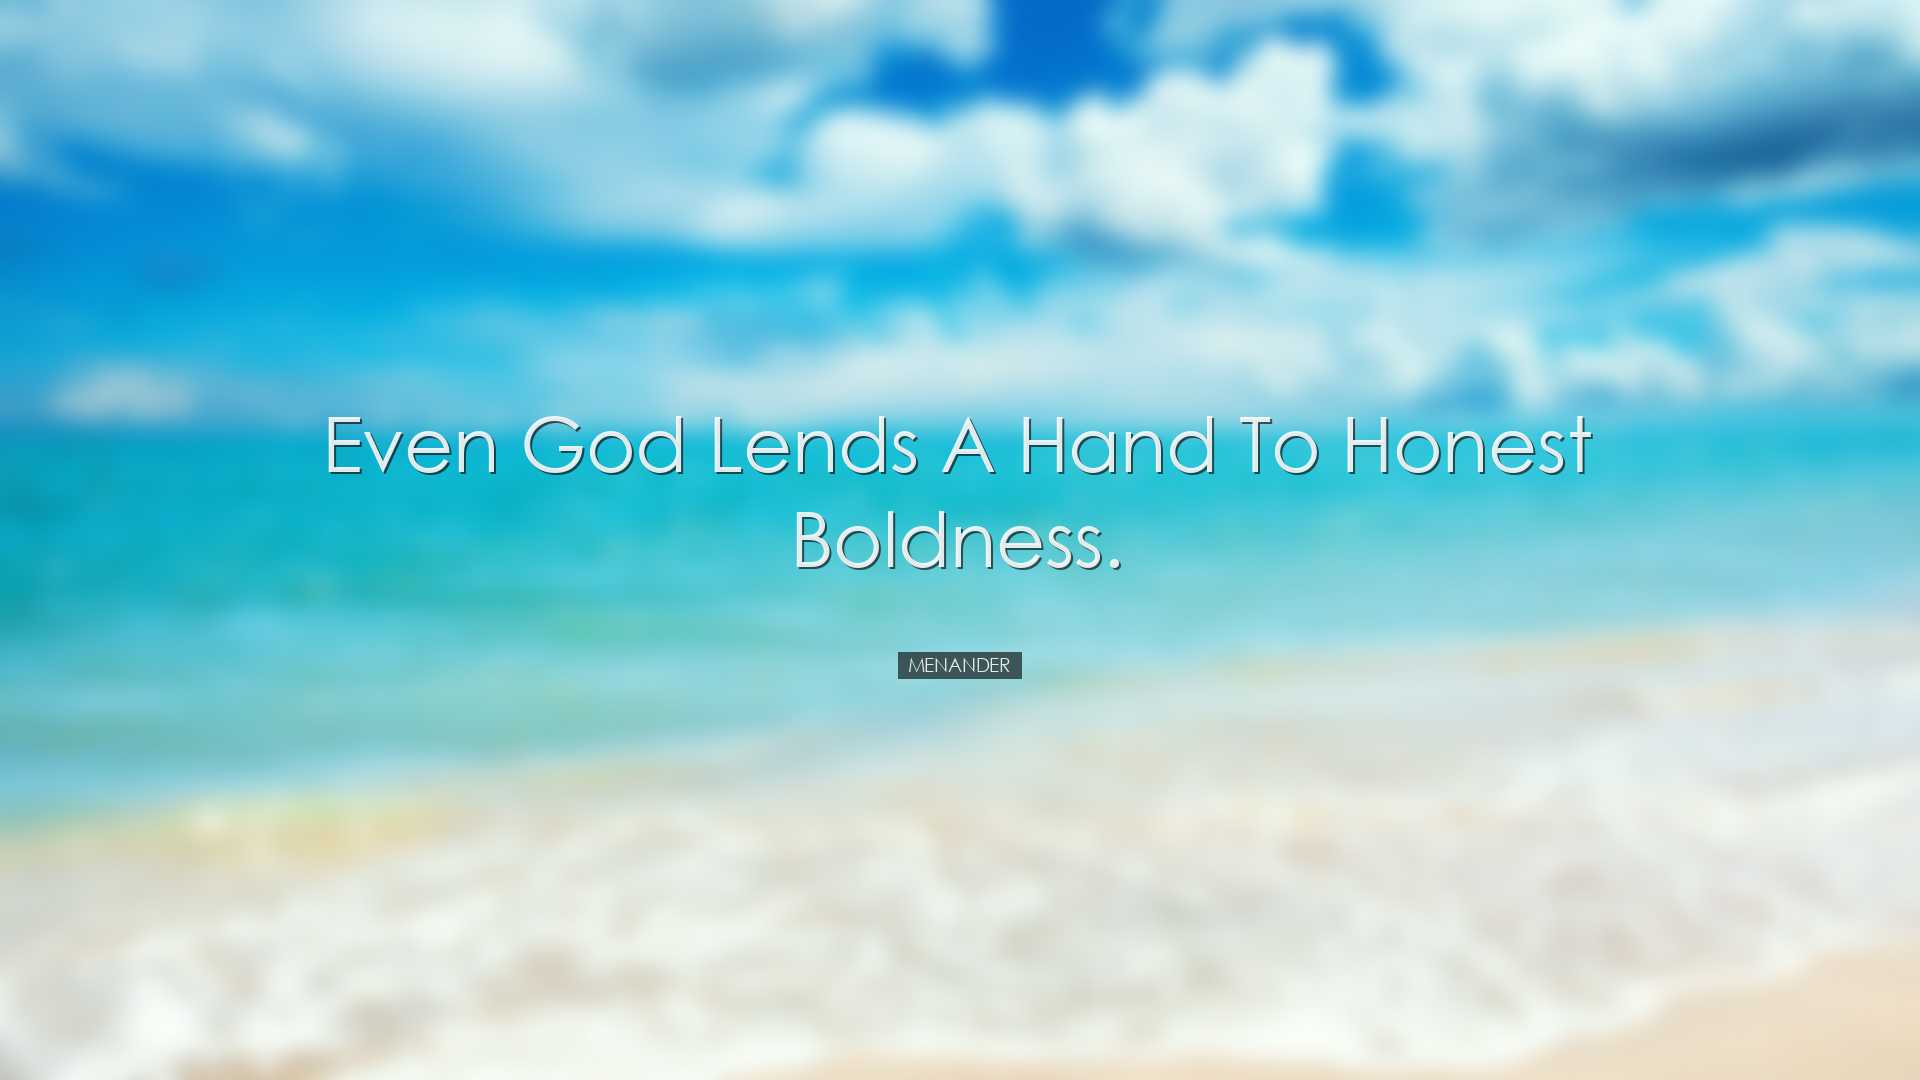 Even God lends a hand to honest boldness. - Menander